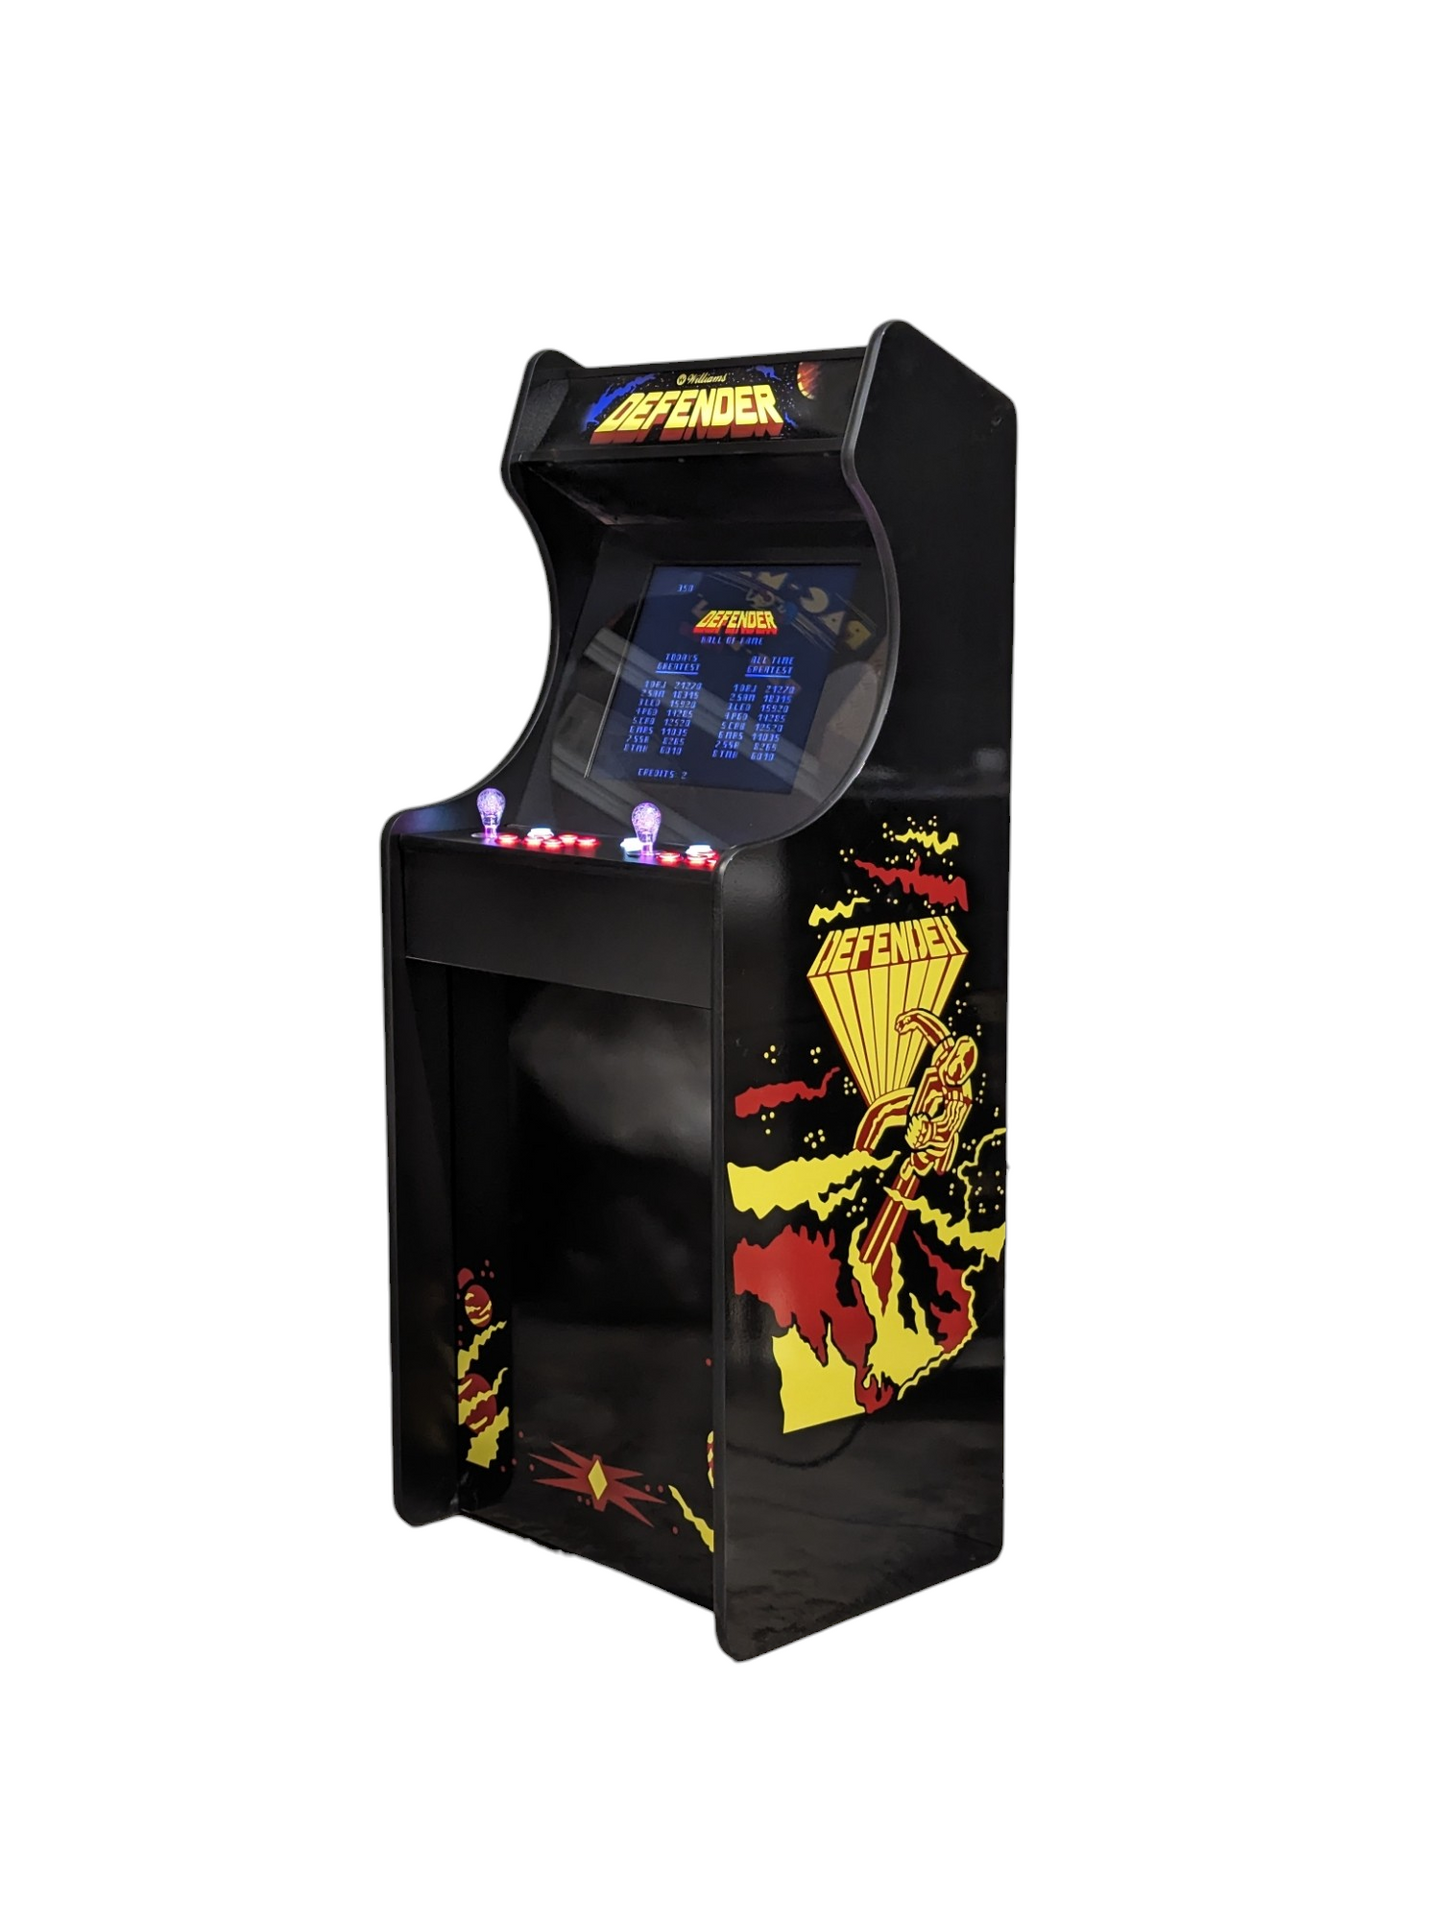 Deluxe 24 Arcade Machine - Defender Theme